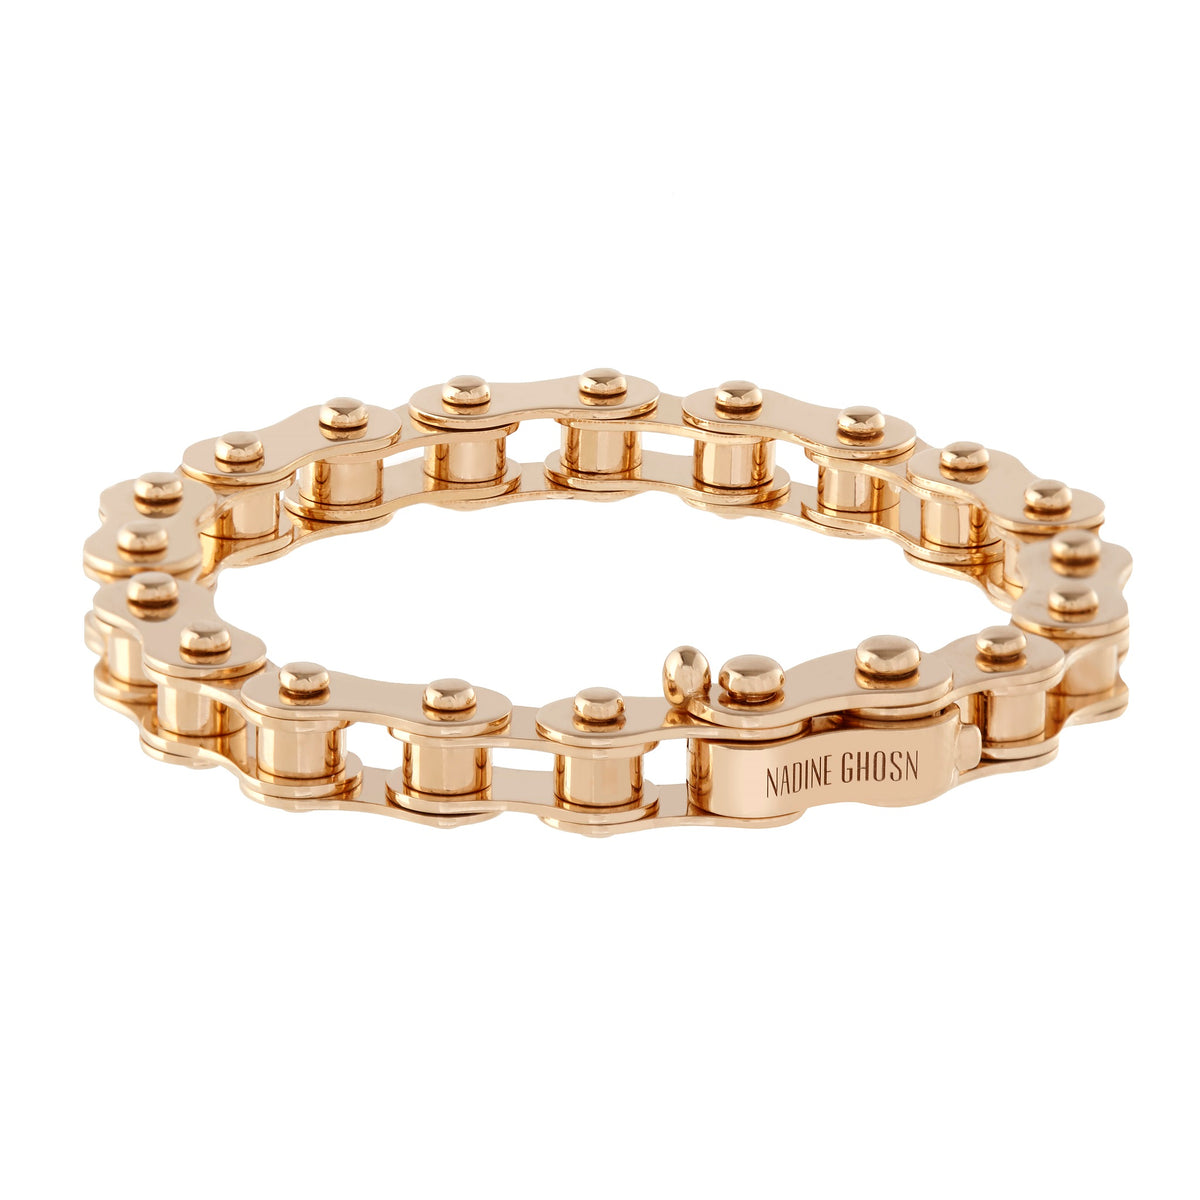 LV Rose gold color Bracelet on Mercari